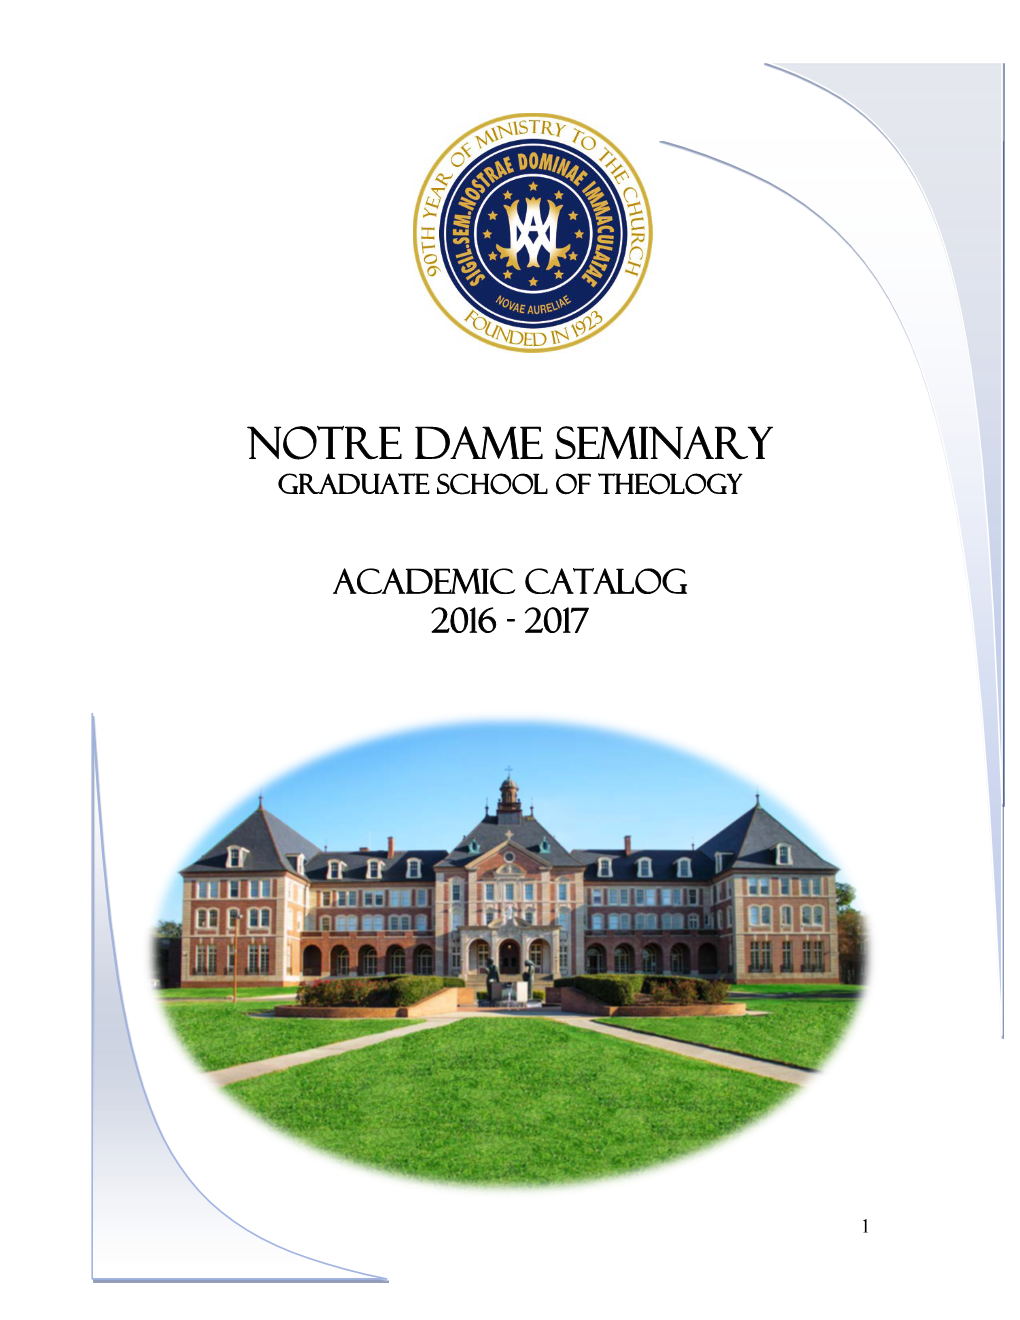 Notre Dame Seminary Graduate School of Theology